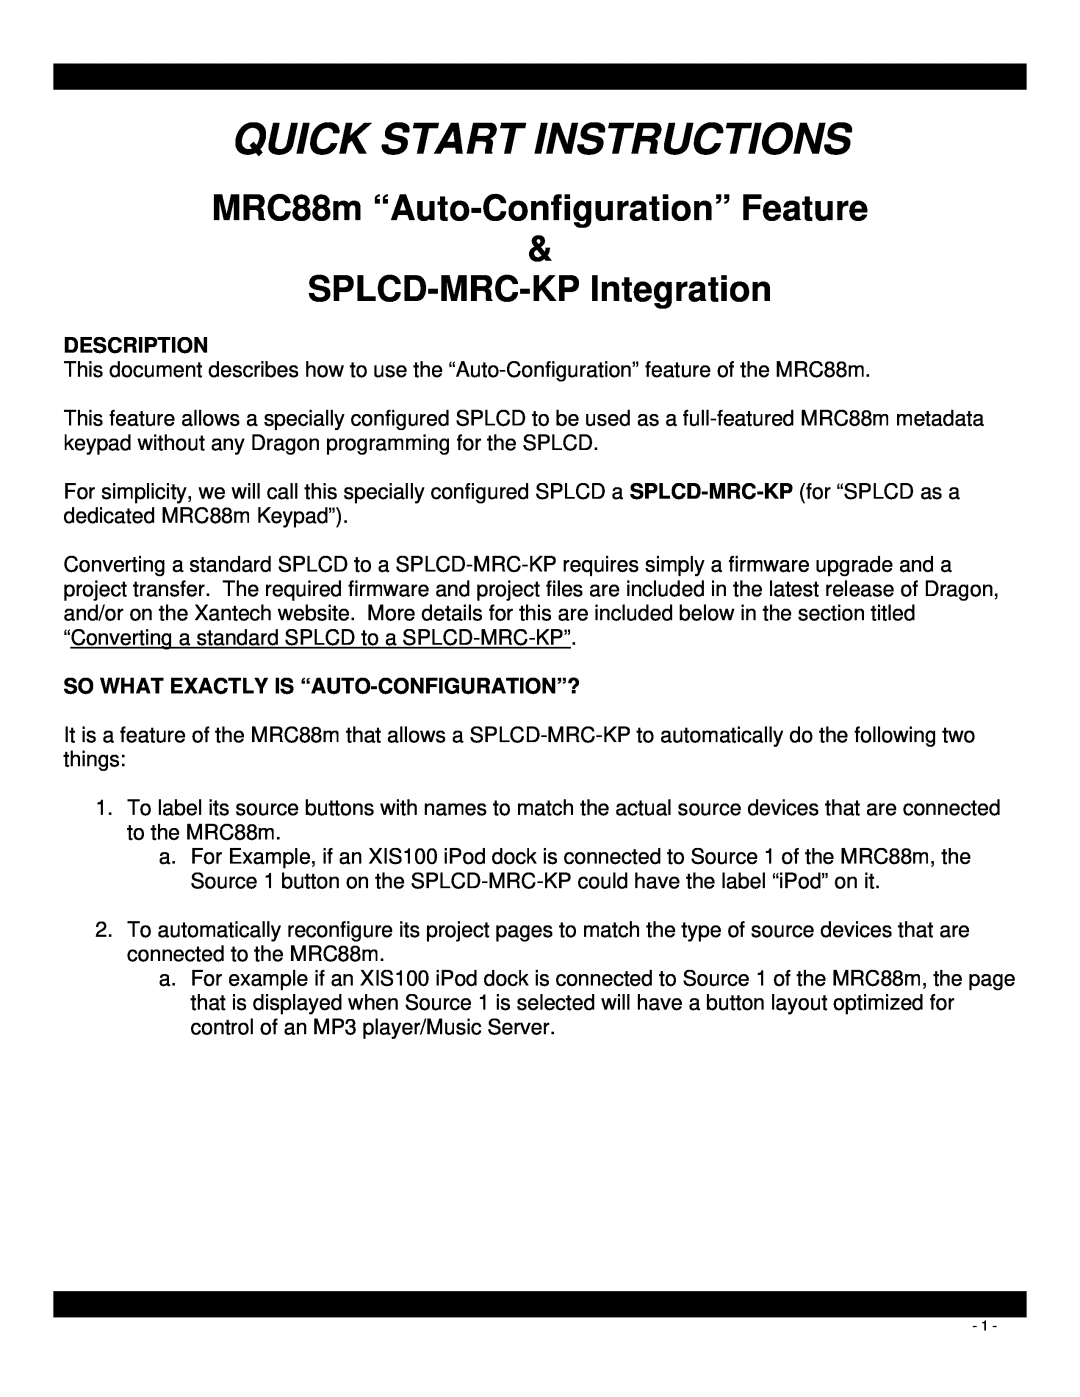 Xantech MRC88M quick start Quick Start Instructions, MRC88m “Auto-Configuration”Feature, SPLCD-MRC-KPIntegration 